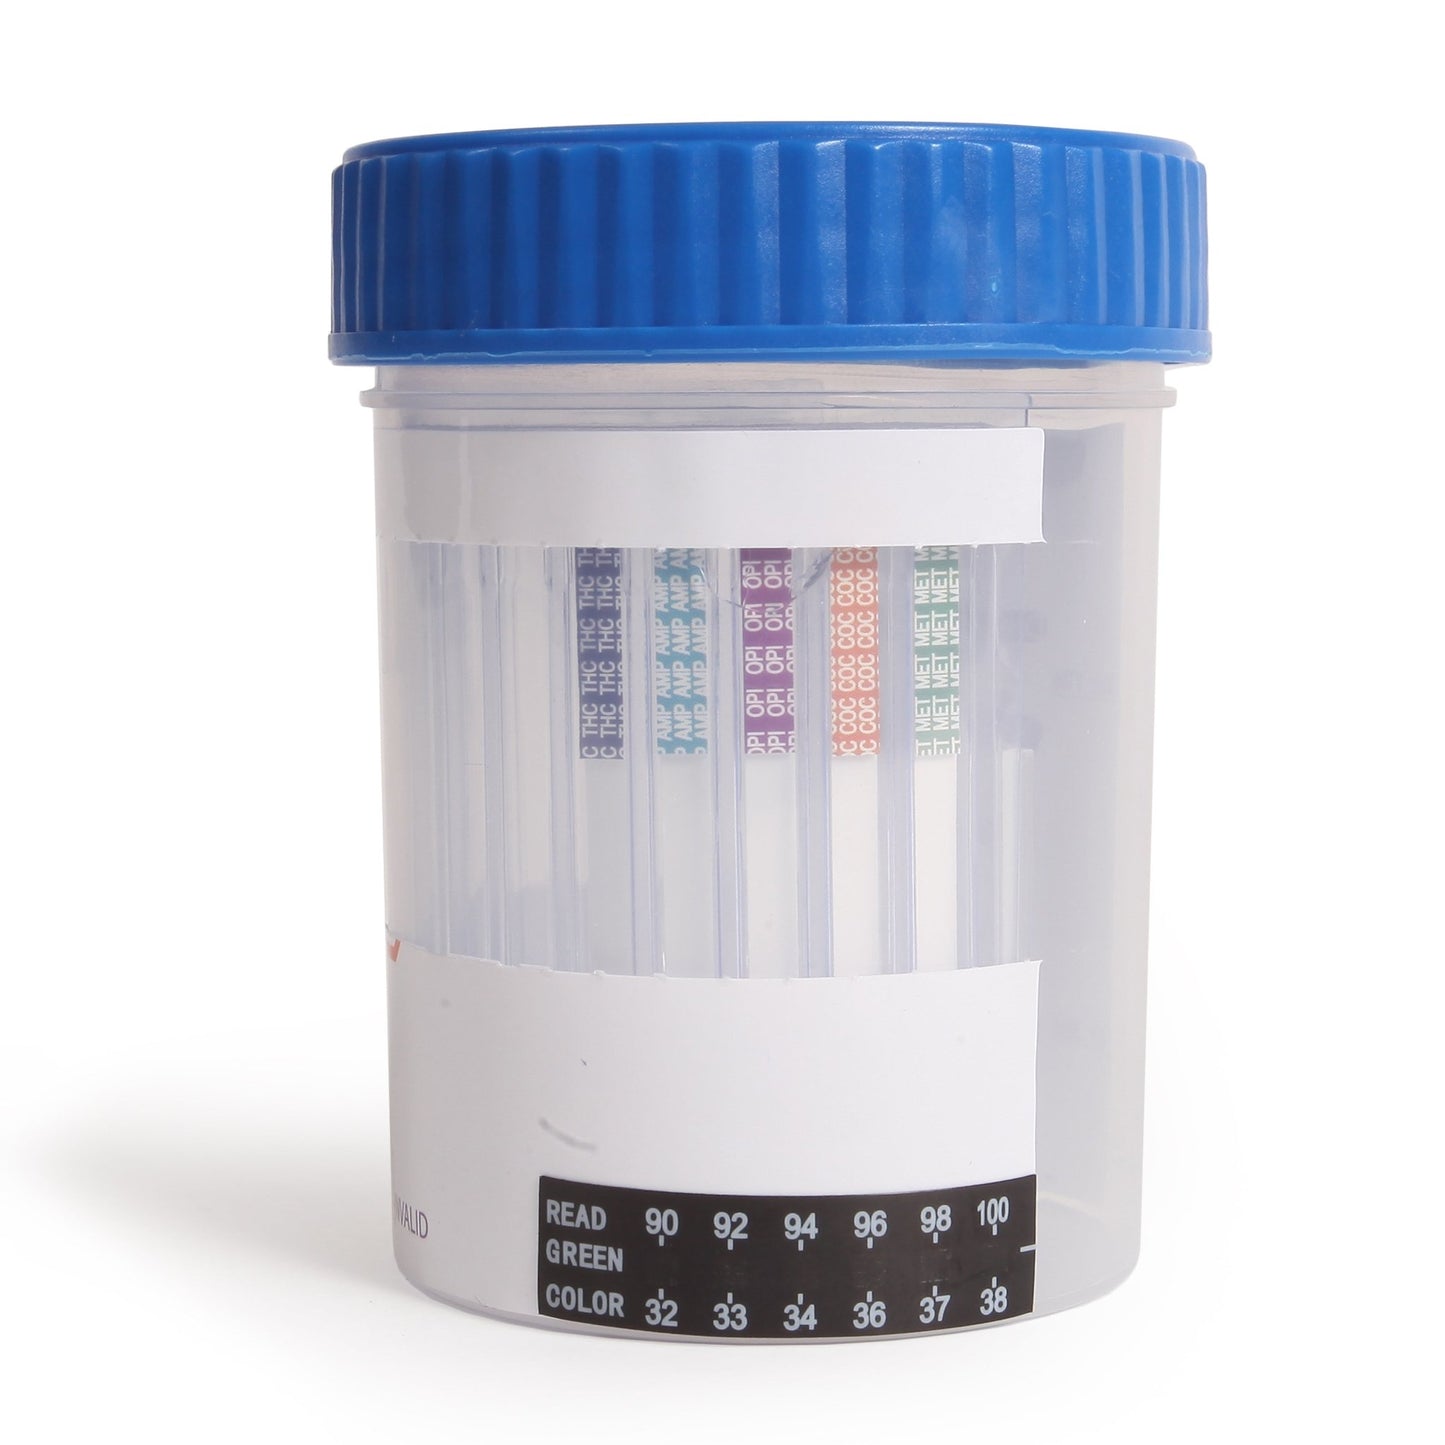 Healgen 12 Panel Drug Cup Tests - Verséa Diagnostics